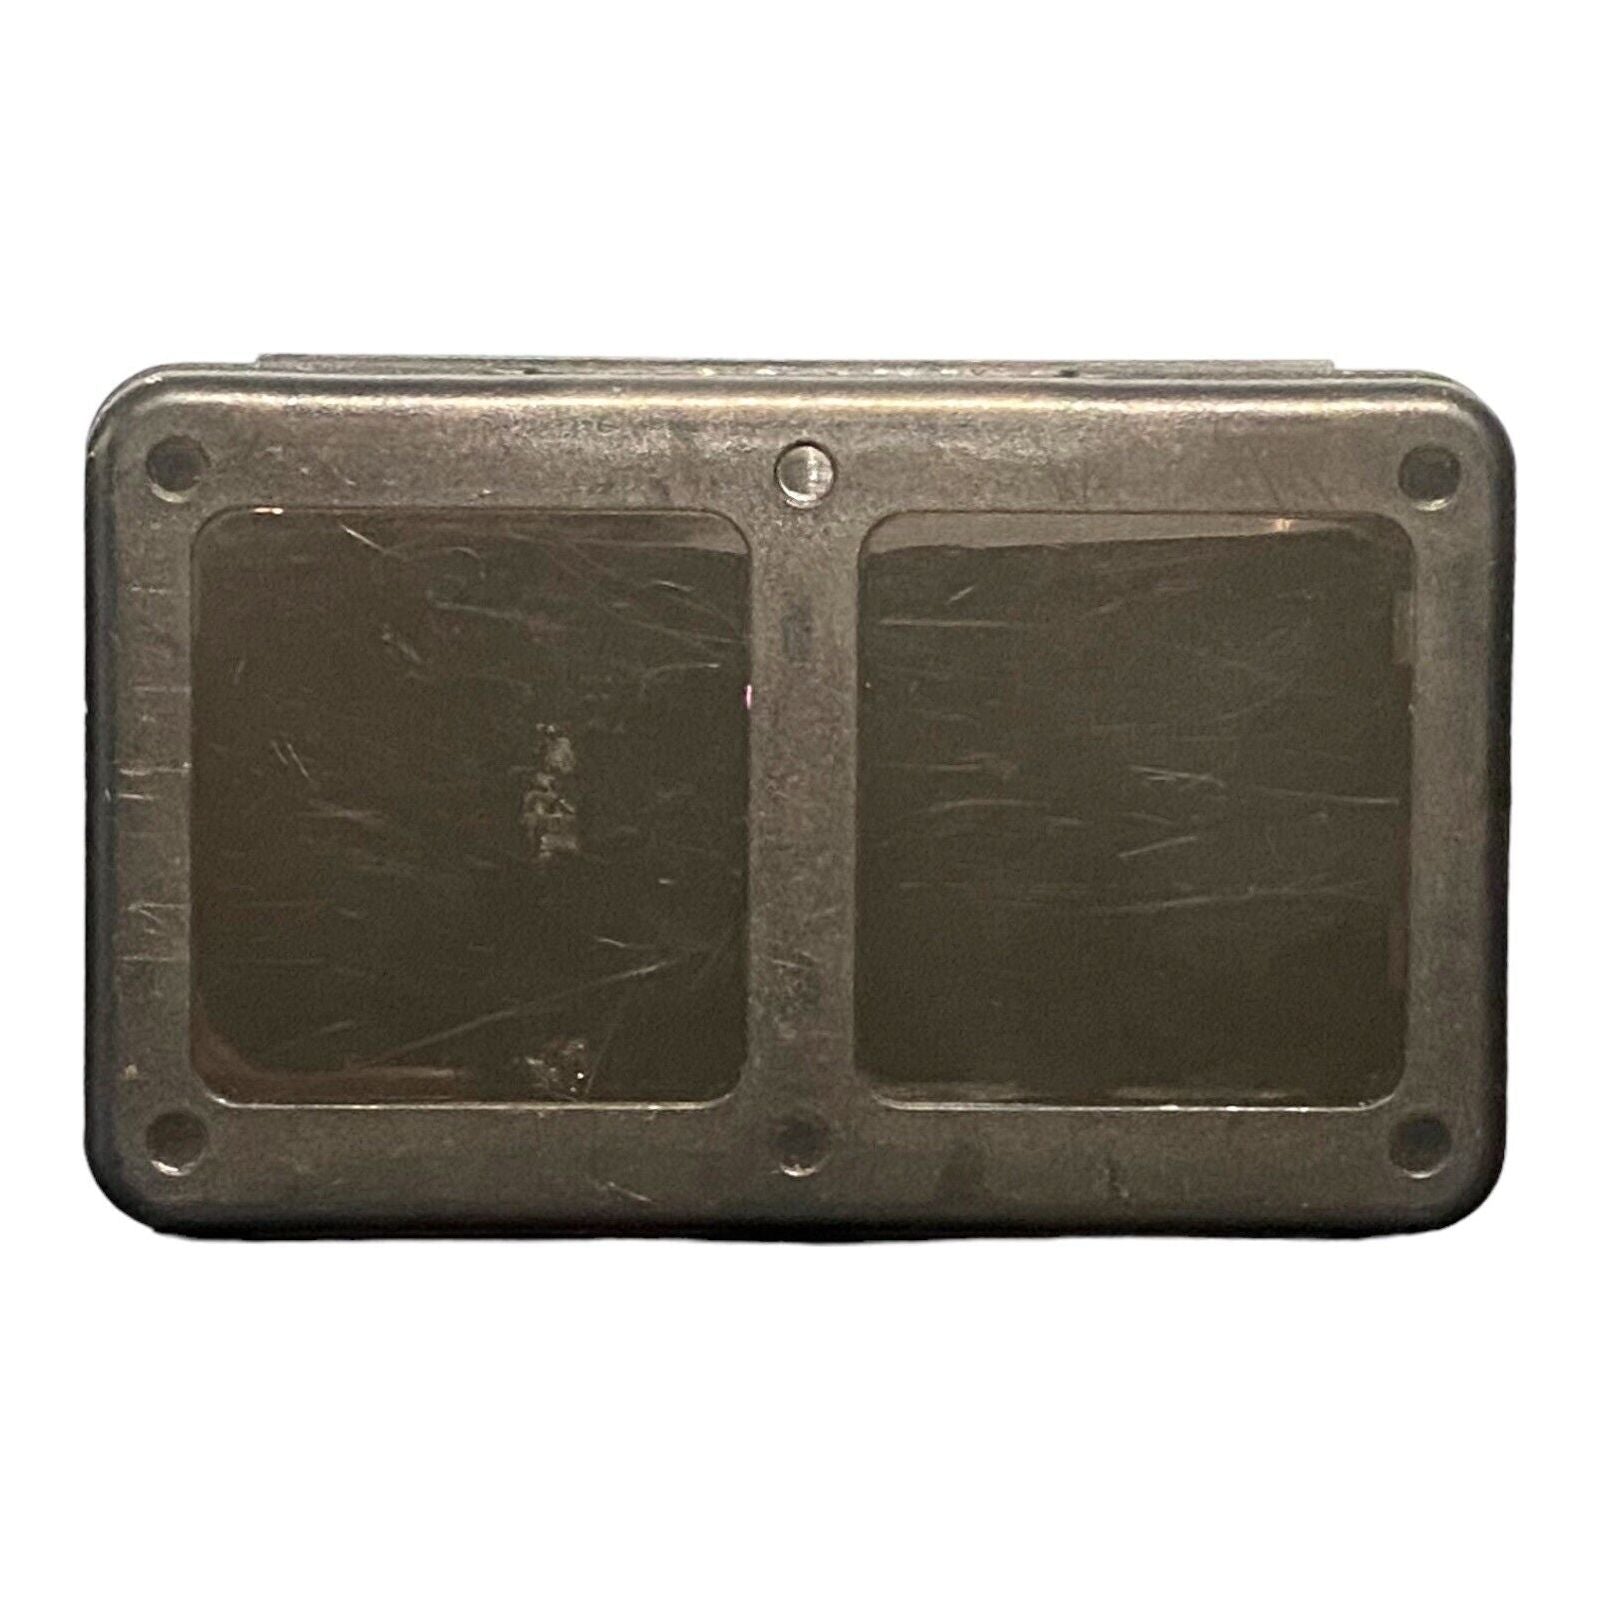 Nintendo DS Cartridge Case